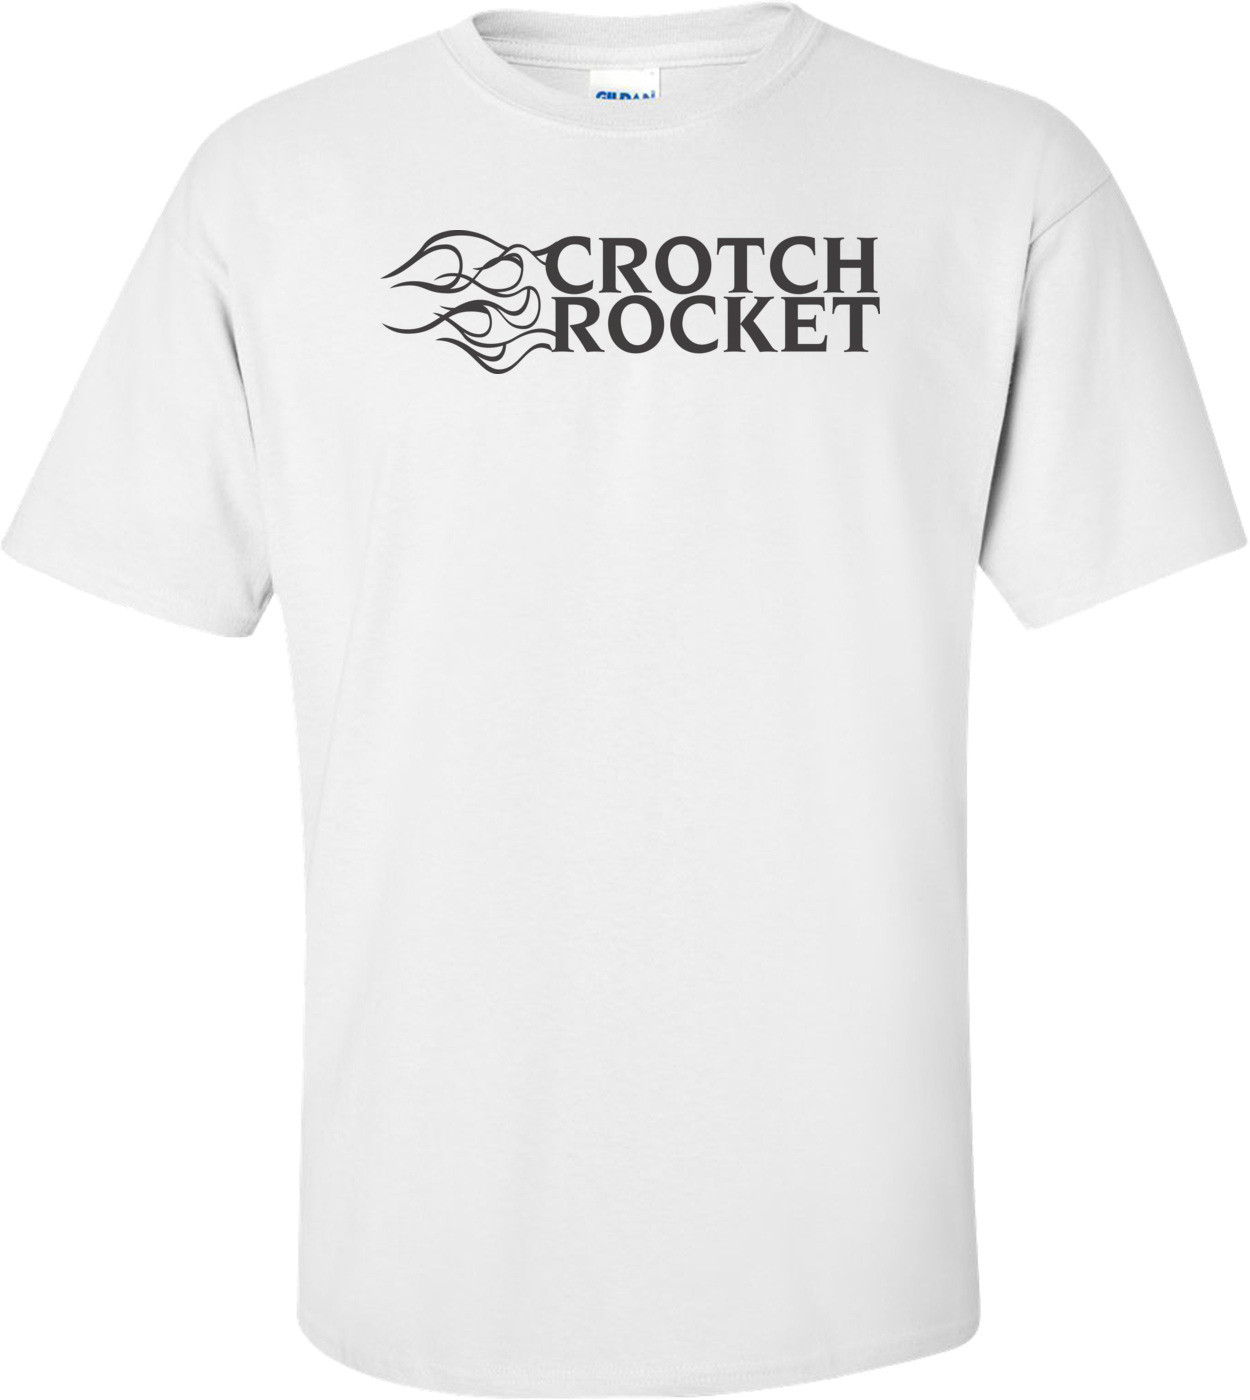 Crotch Rocket T-shirt